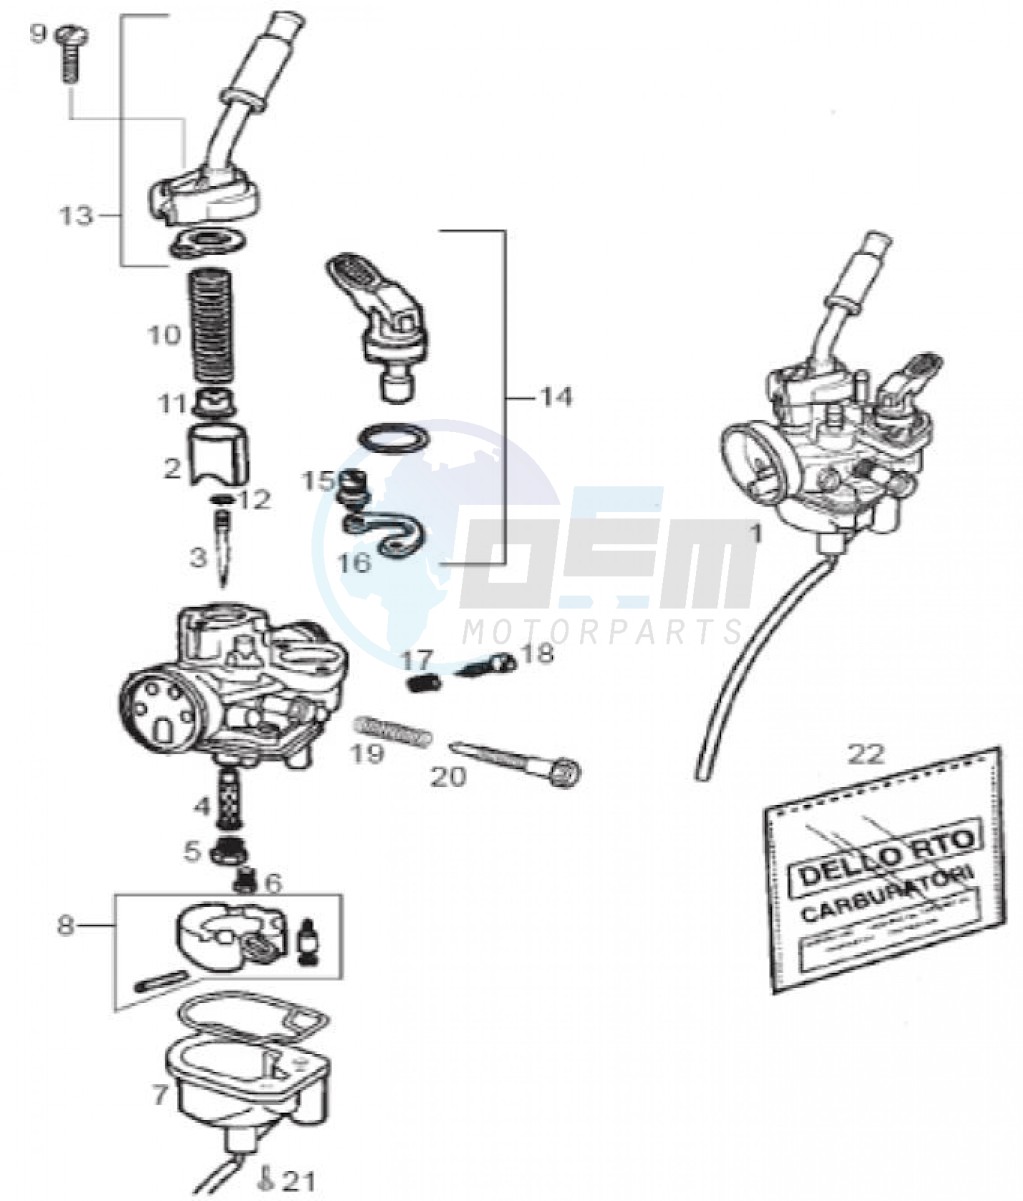 Carburetor (Positions) blueprint